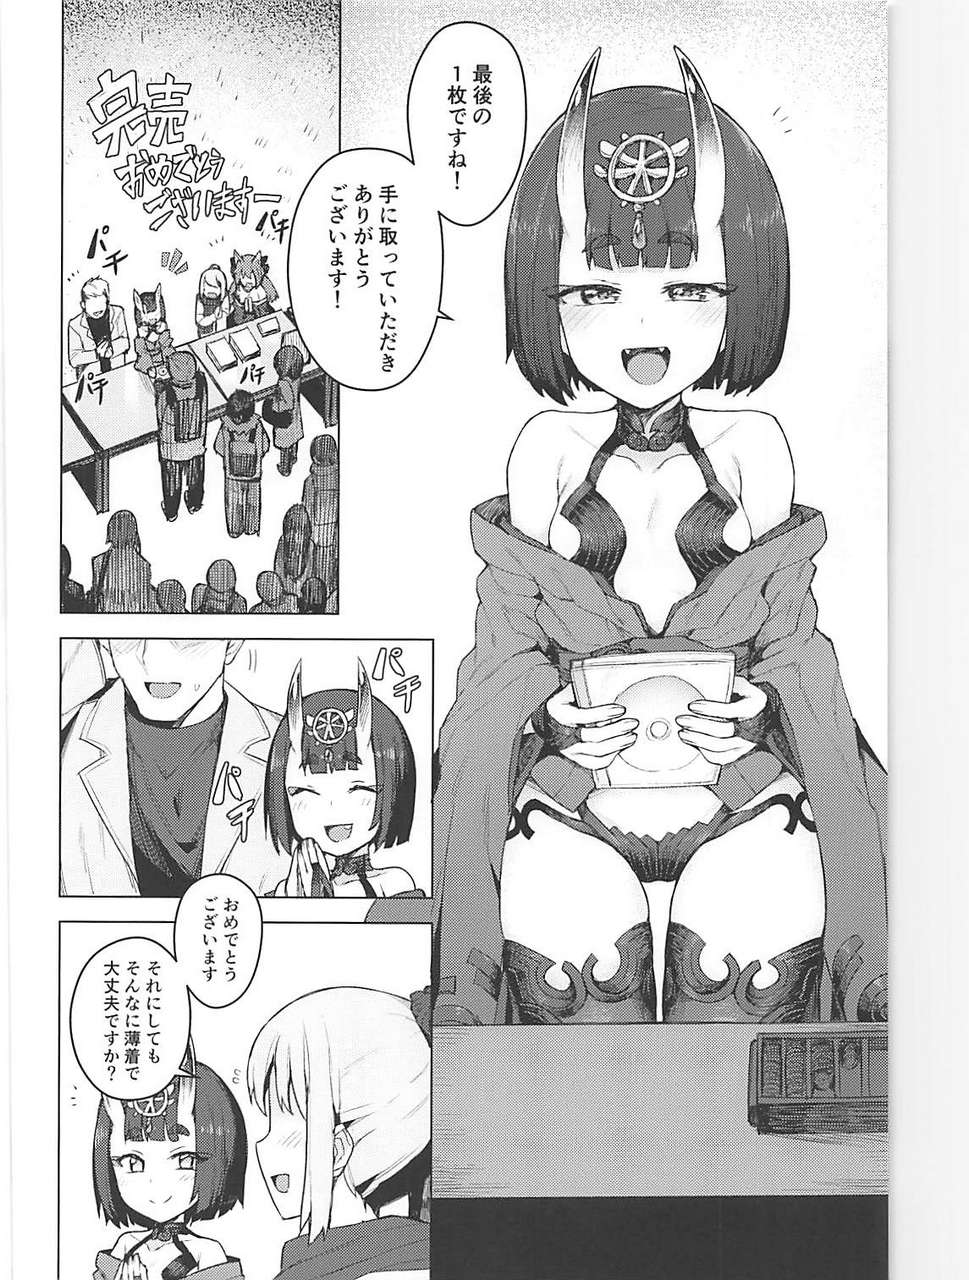 Comic1 13 Orangemaru Jp06 Cosplay Kanojo Shuten Douji Fate Grand Order 232167